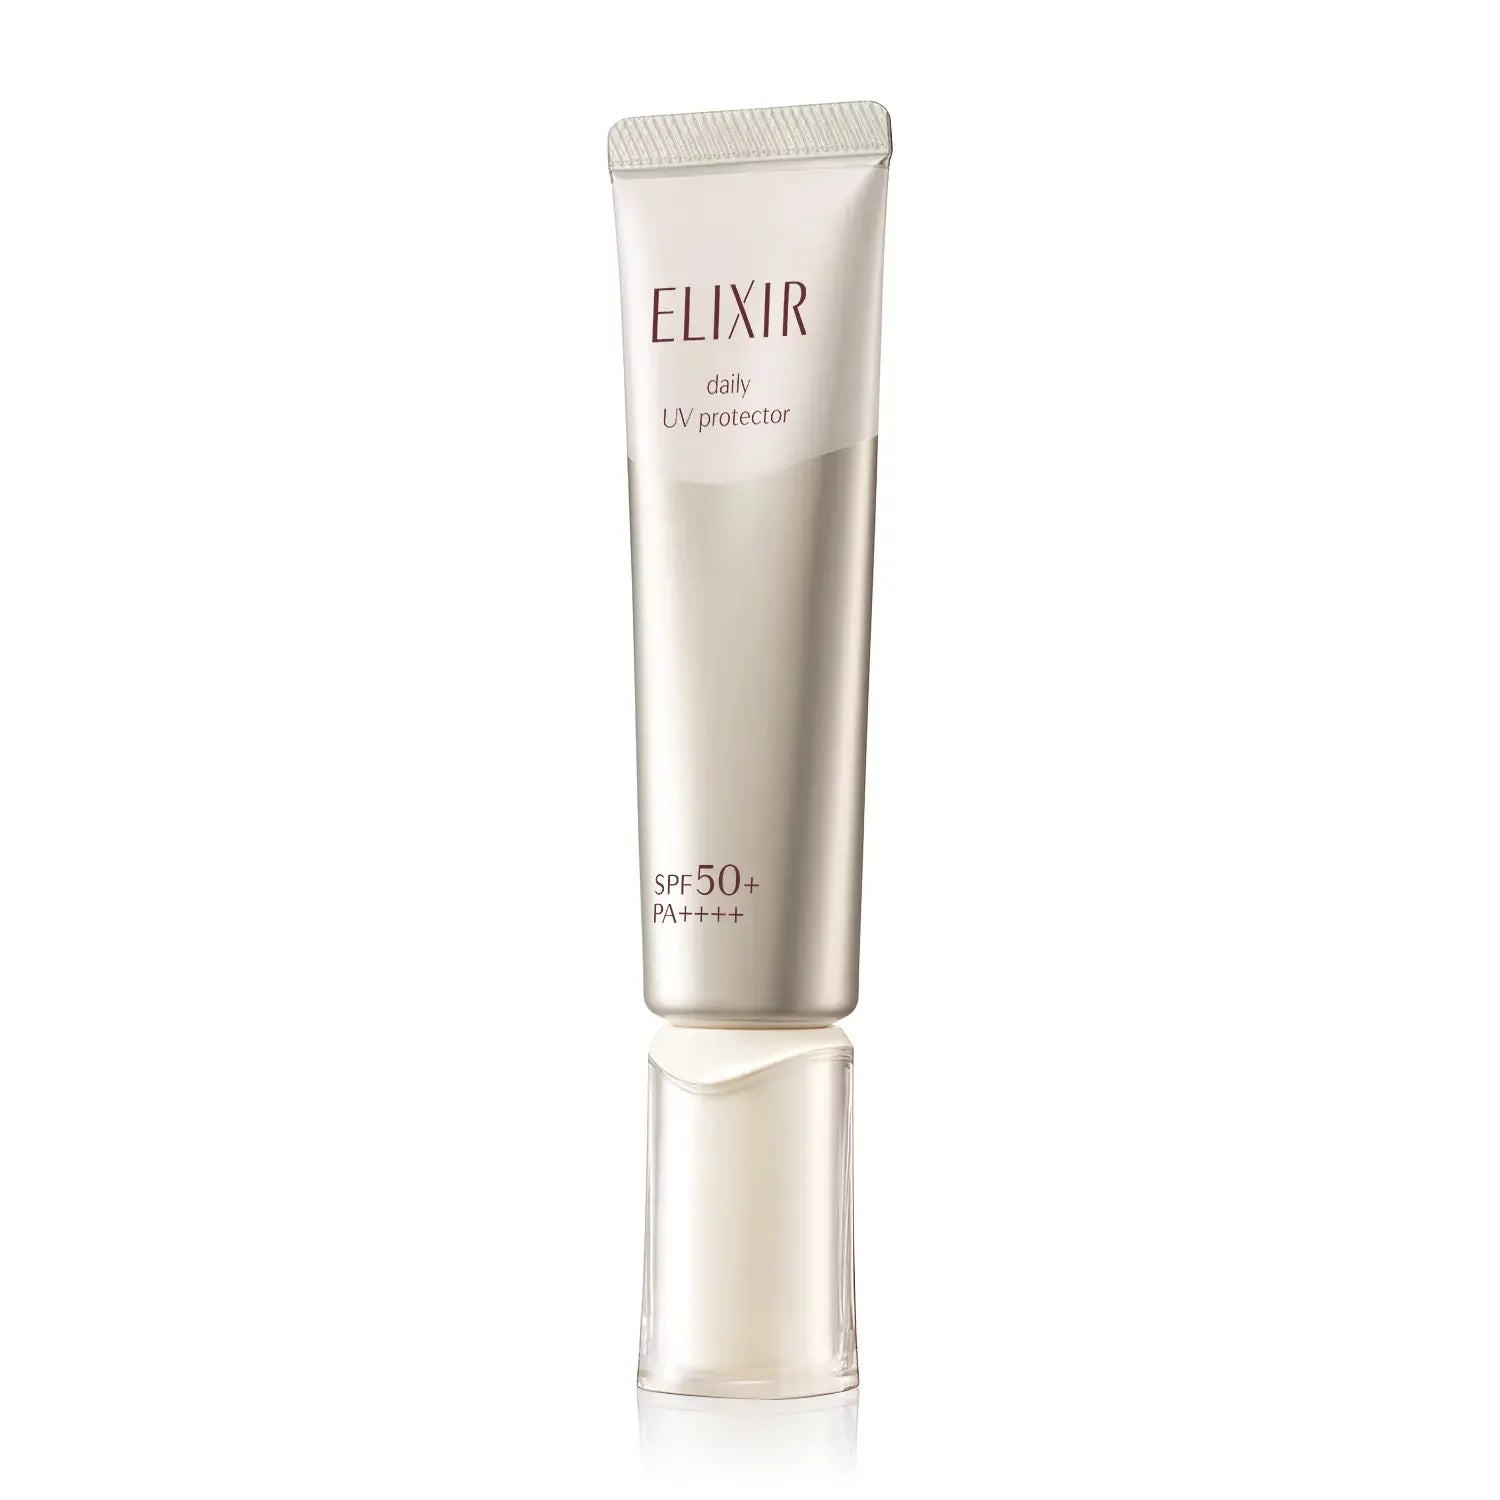 Shiseido Elixir Aging Care Serum Multifunctional Daily UV Protector SPF 50+ 35ml